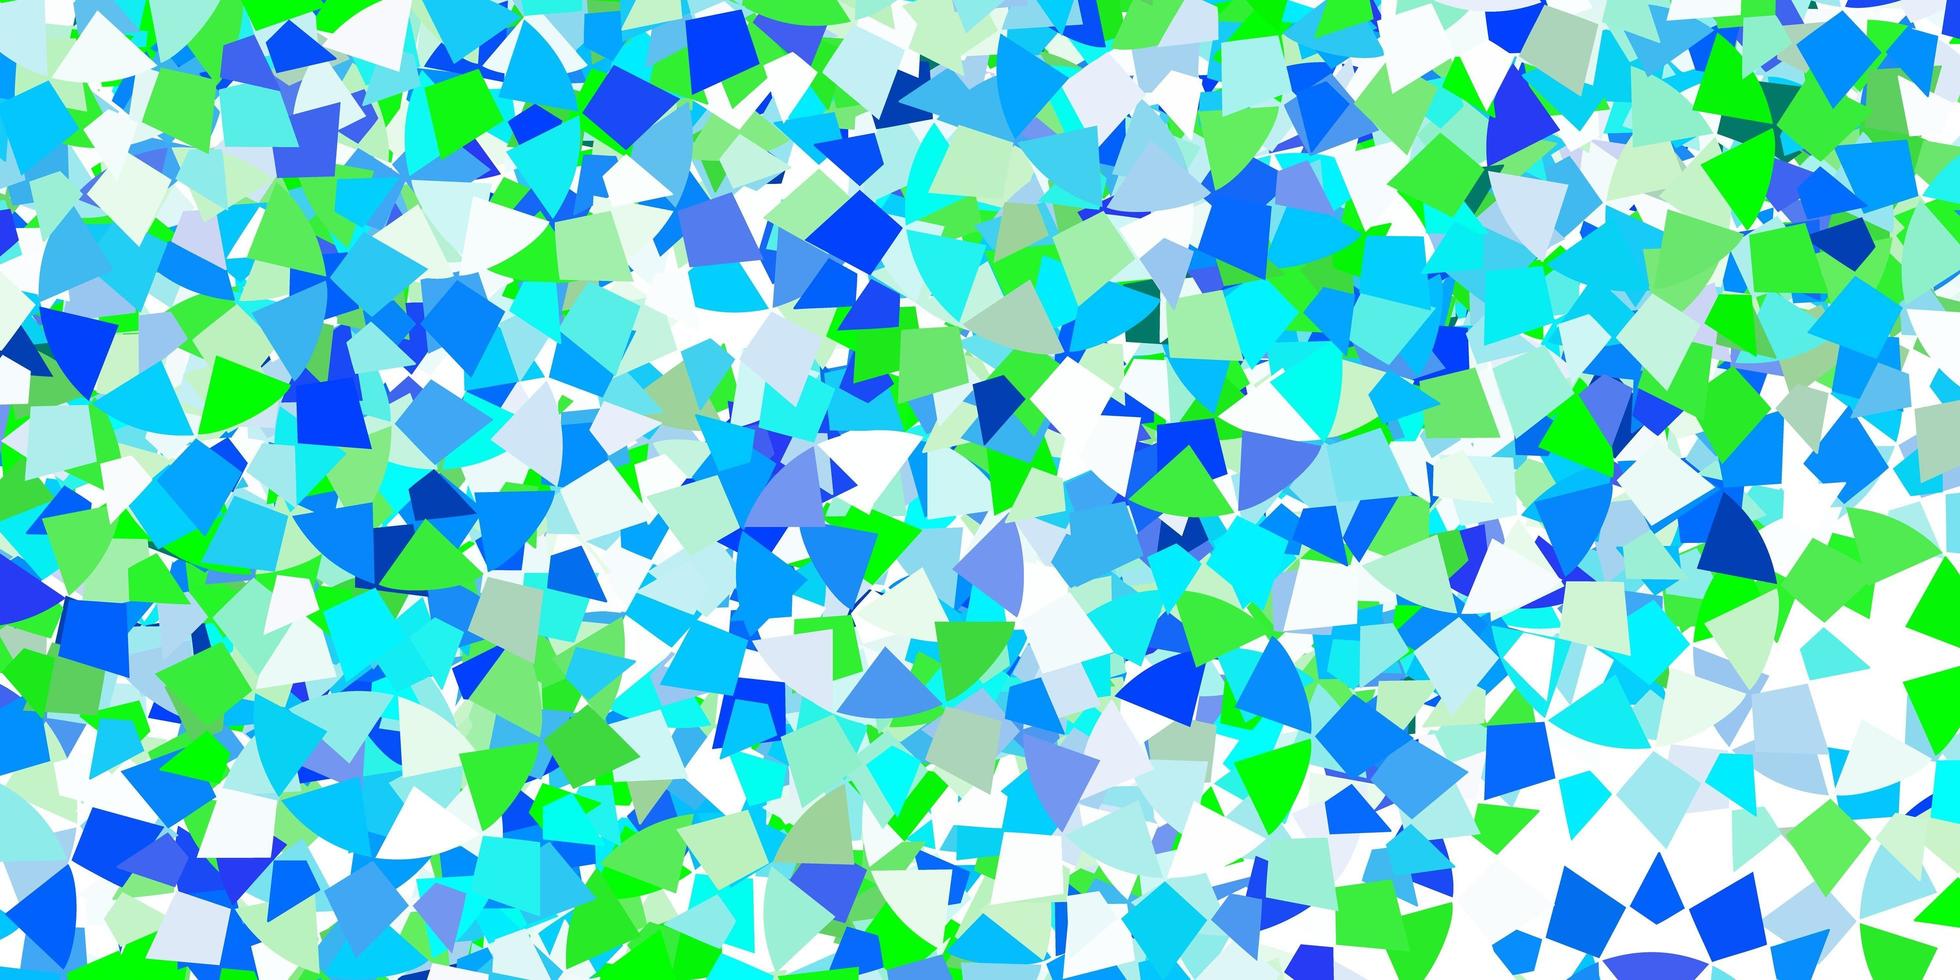 fond de vecteur bleu clair avec des triangles